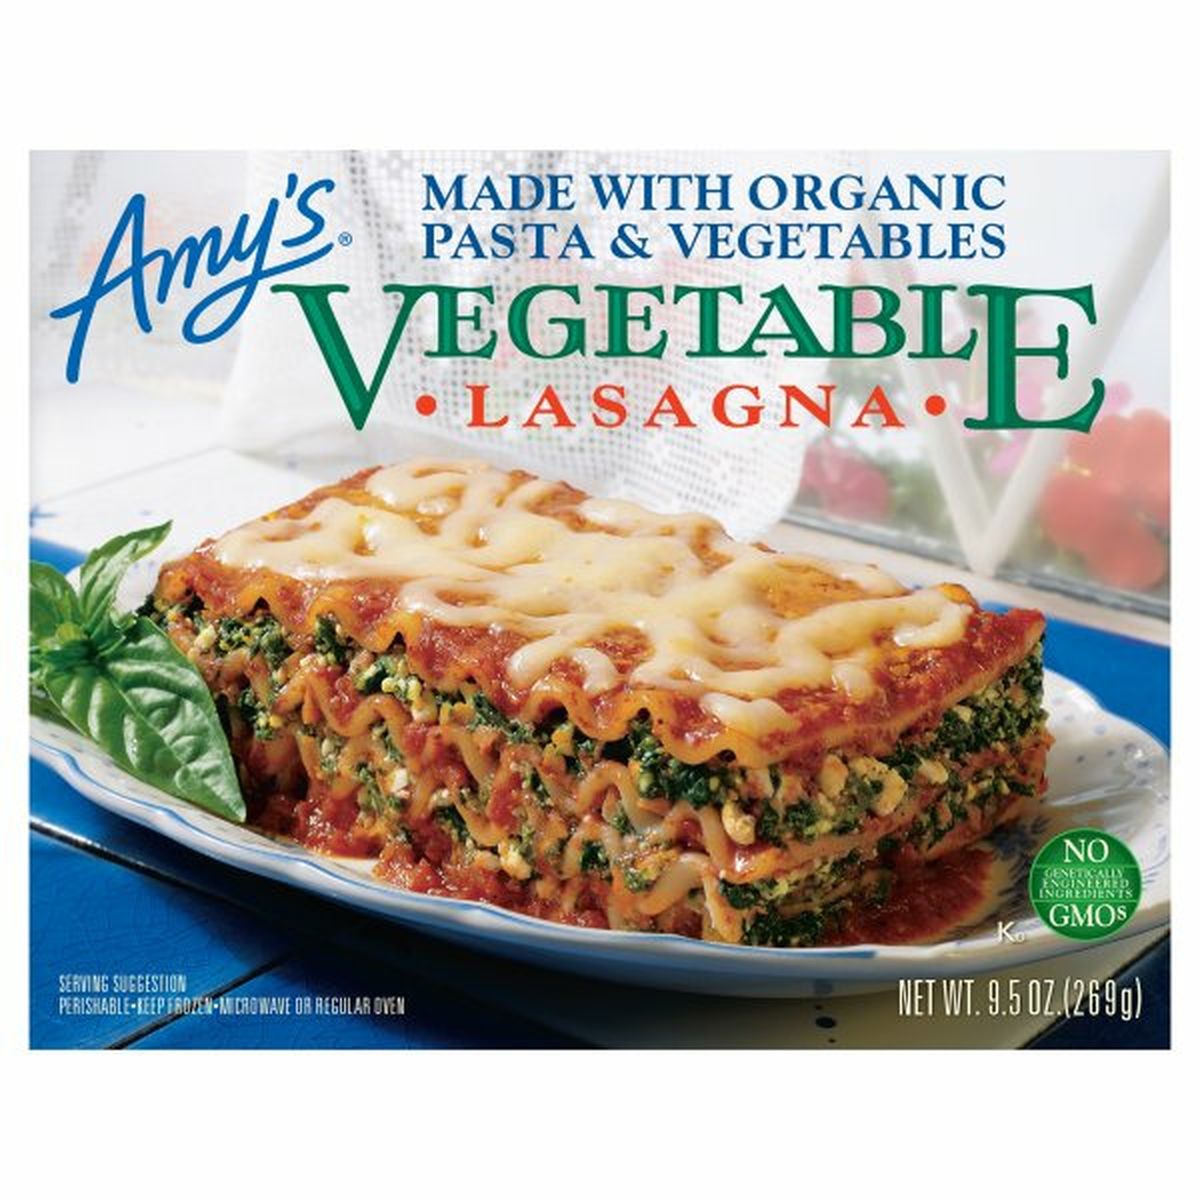 Calories in Amy's Kitchen Lasagna, Vegetable